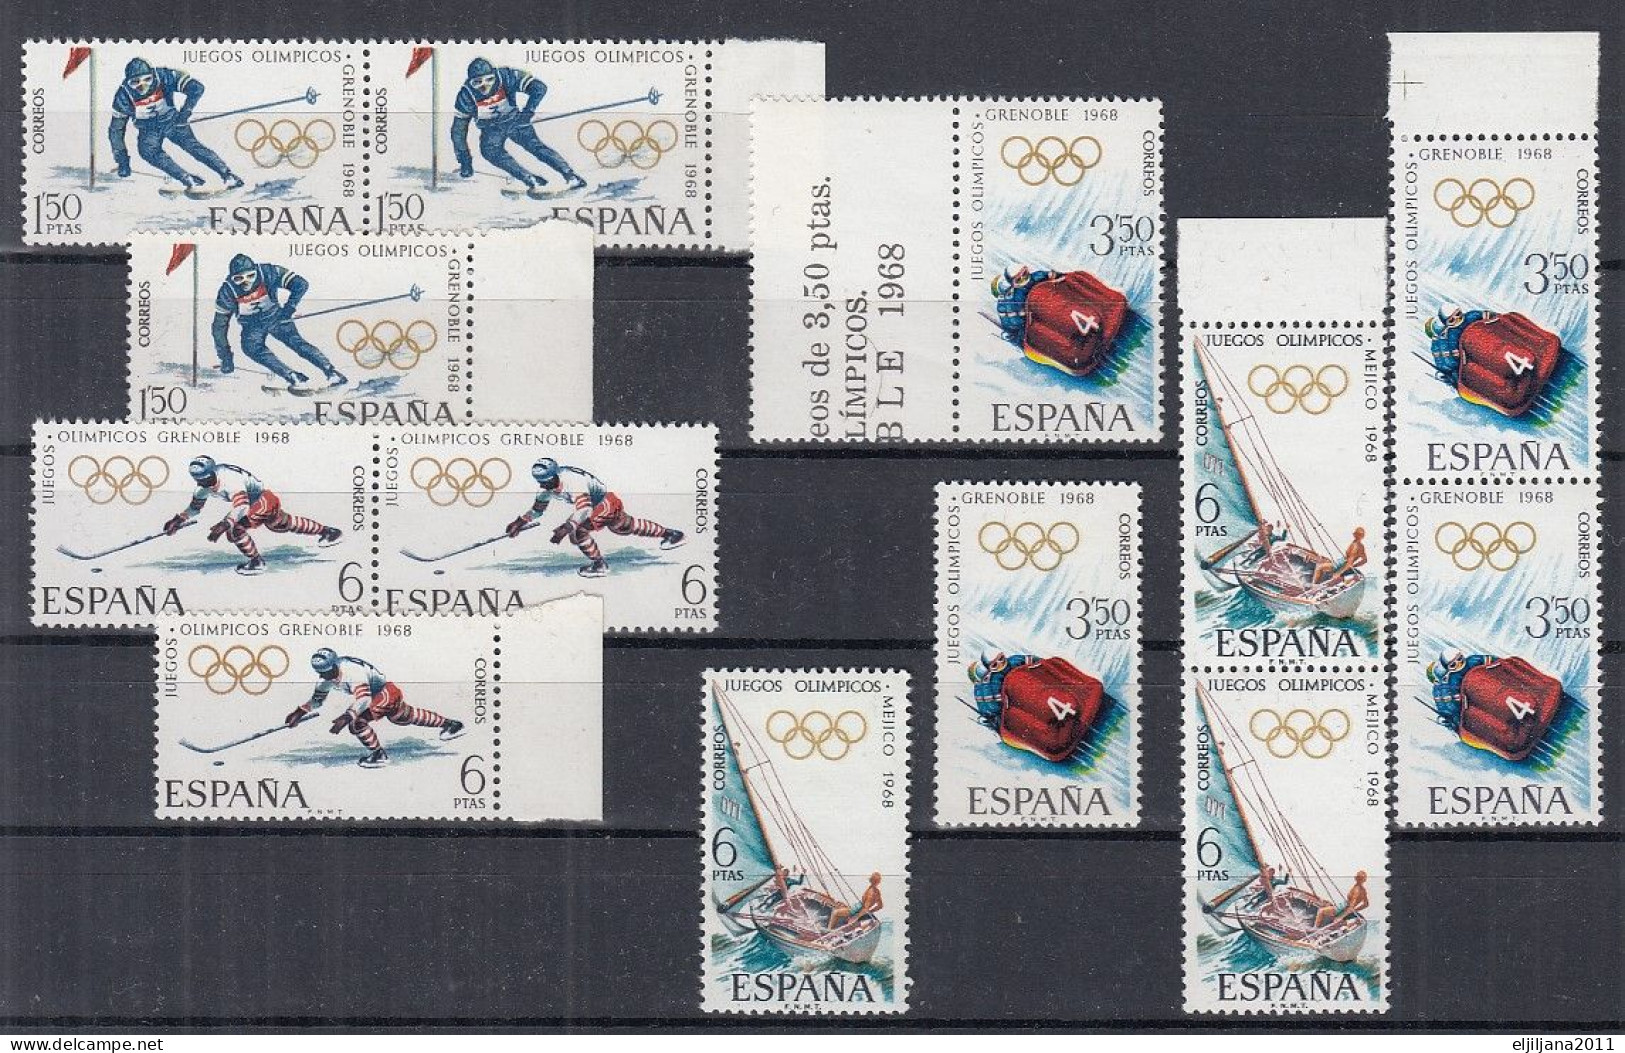 ⁕ SPAIN / ESPANA 1968 ⁕ Olympic Games Mi.1735-1737 & Mi.1780 ⁕ 13v MNH - Nuevos